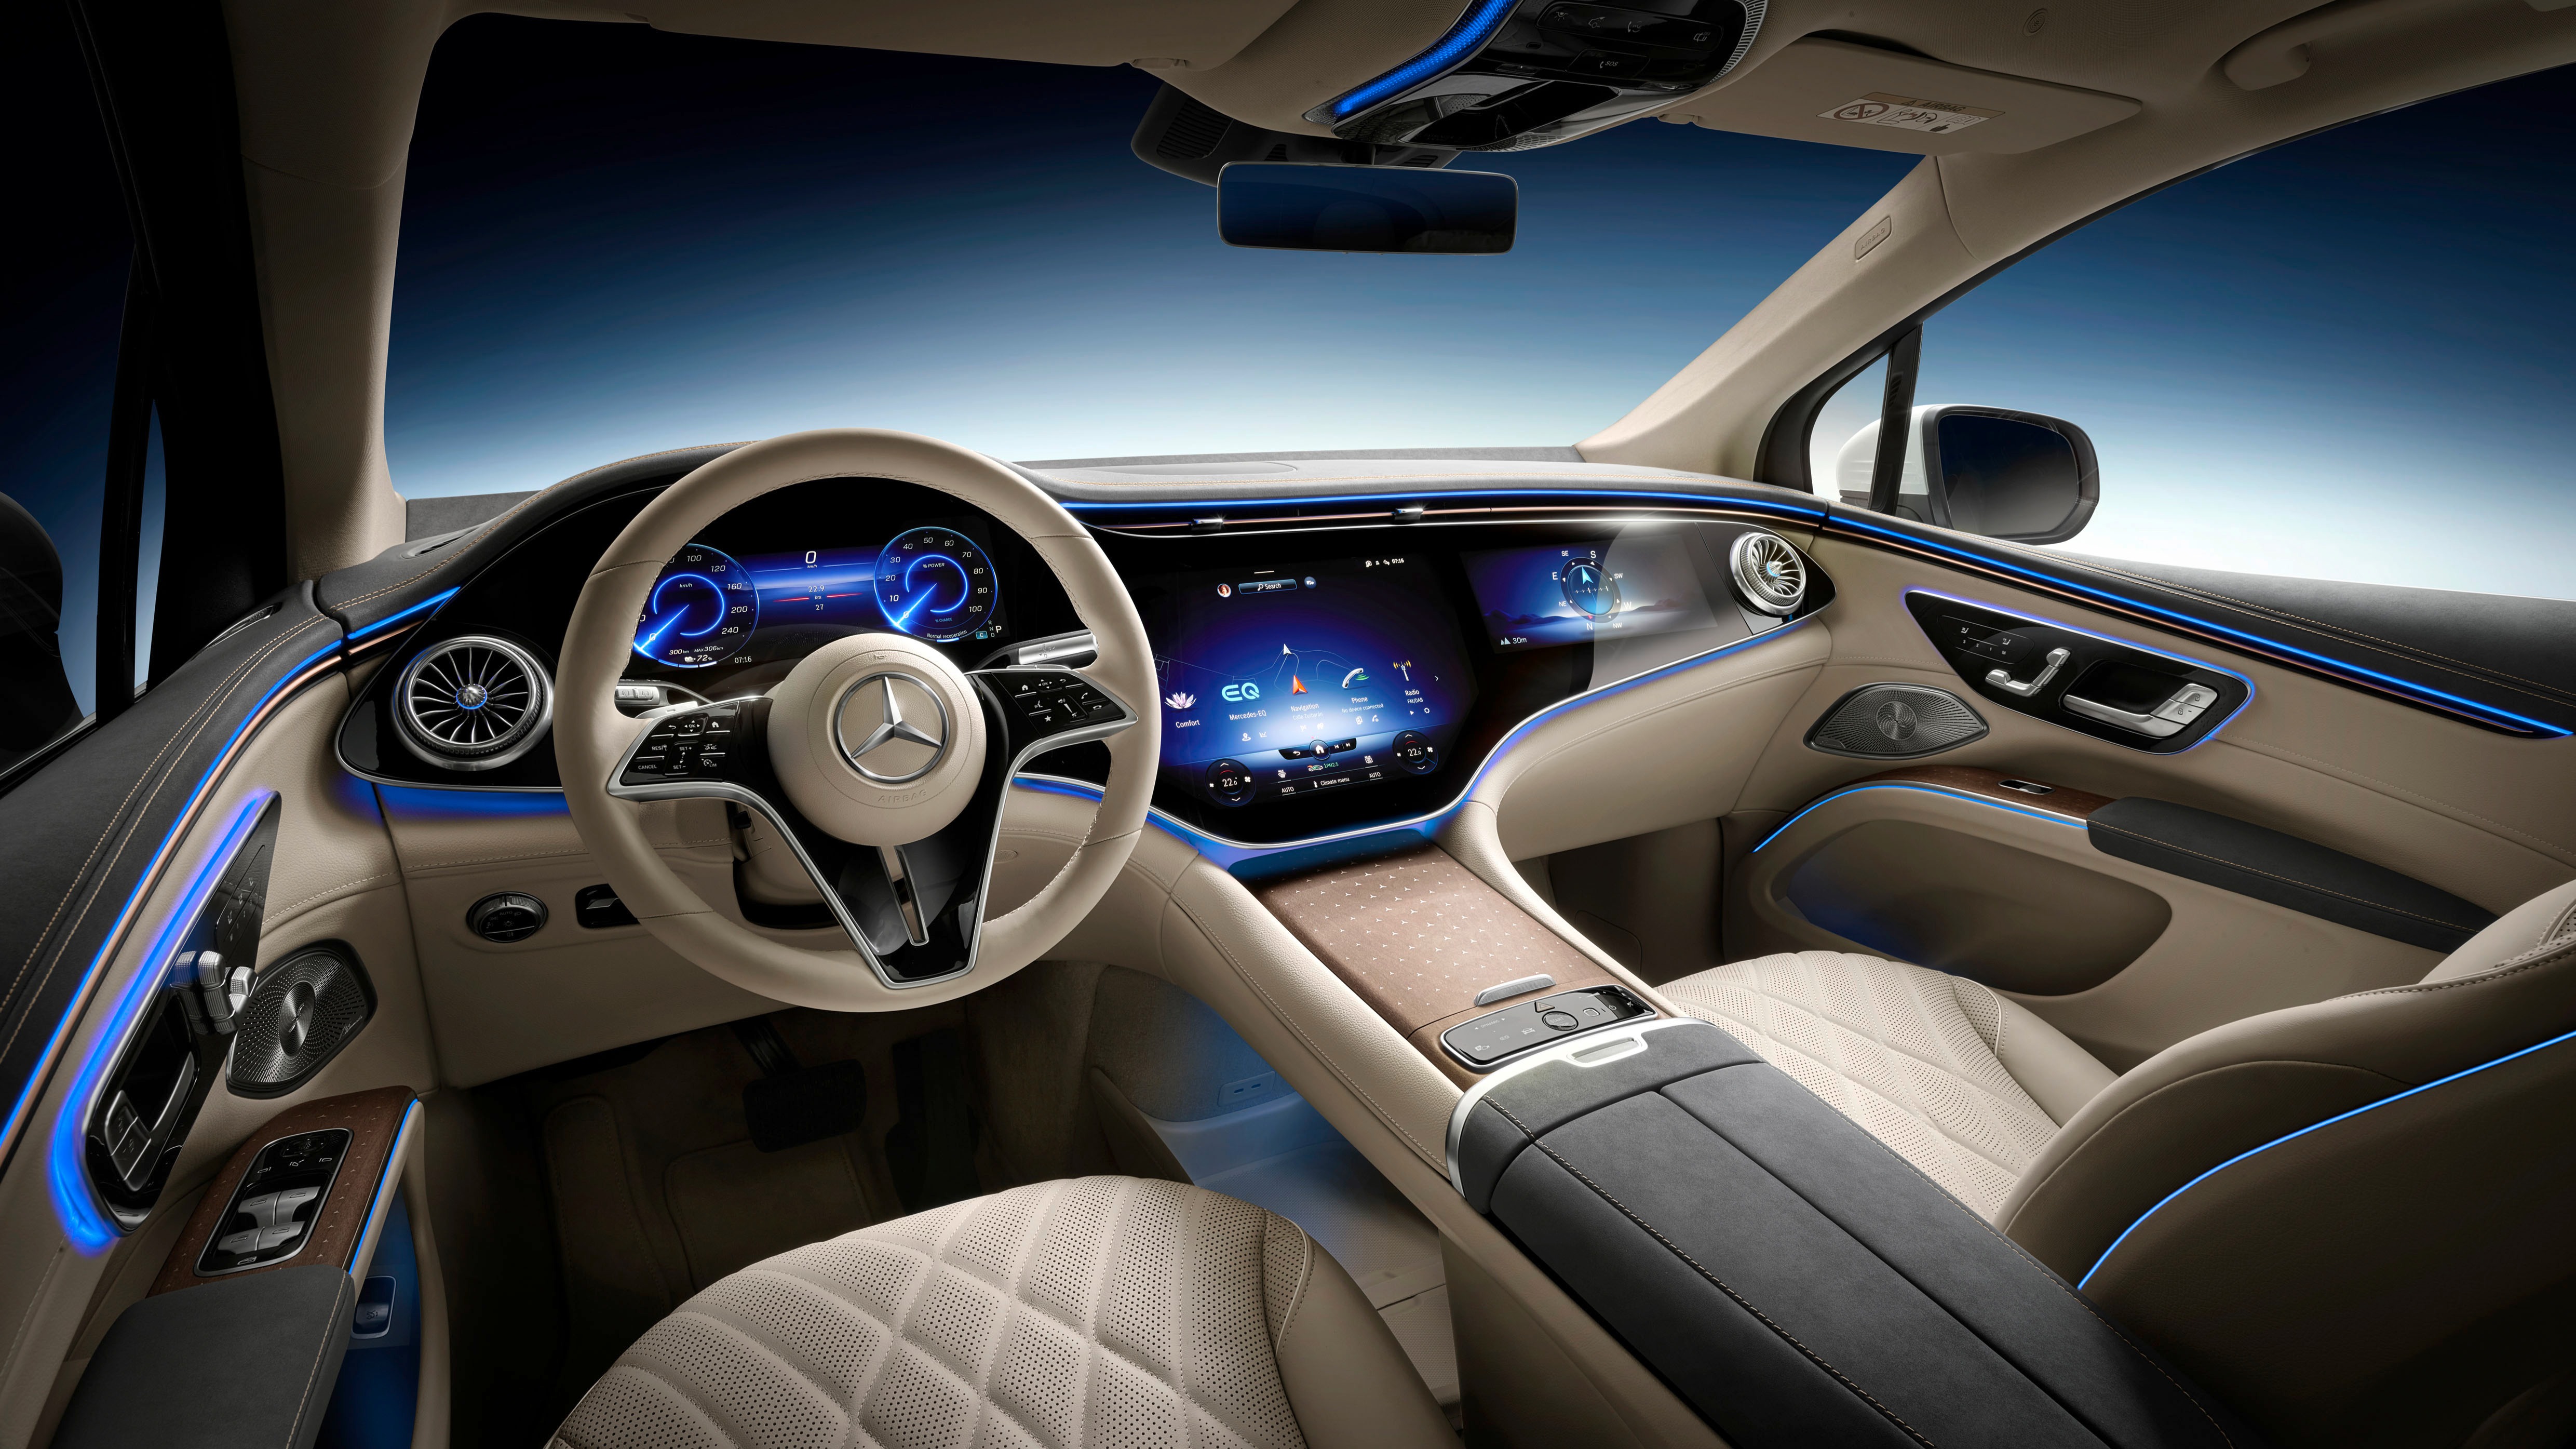 The Mercedes EQS SUV interior